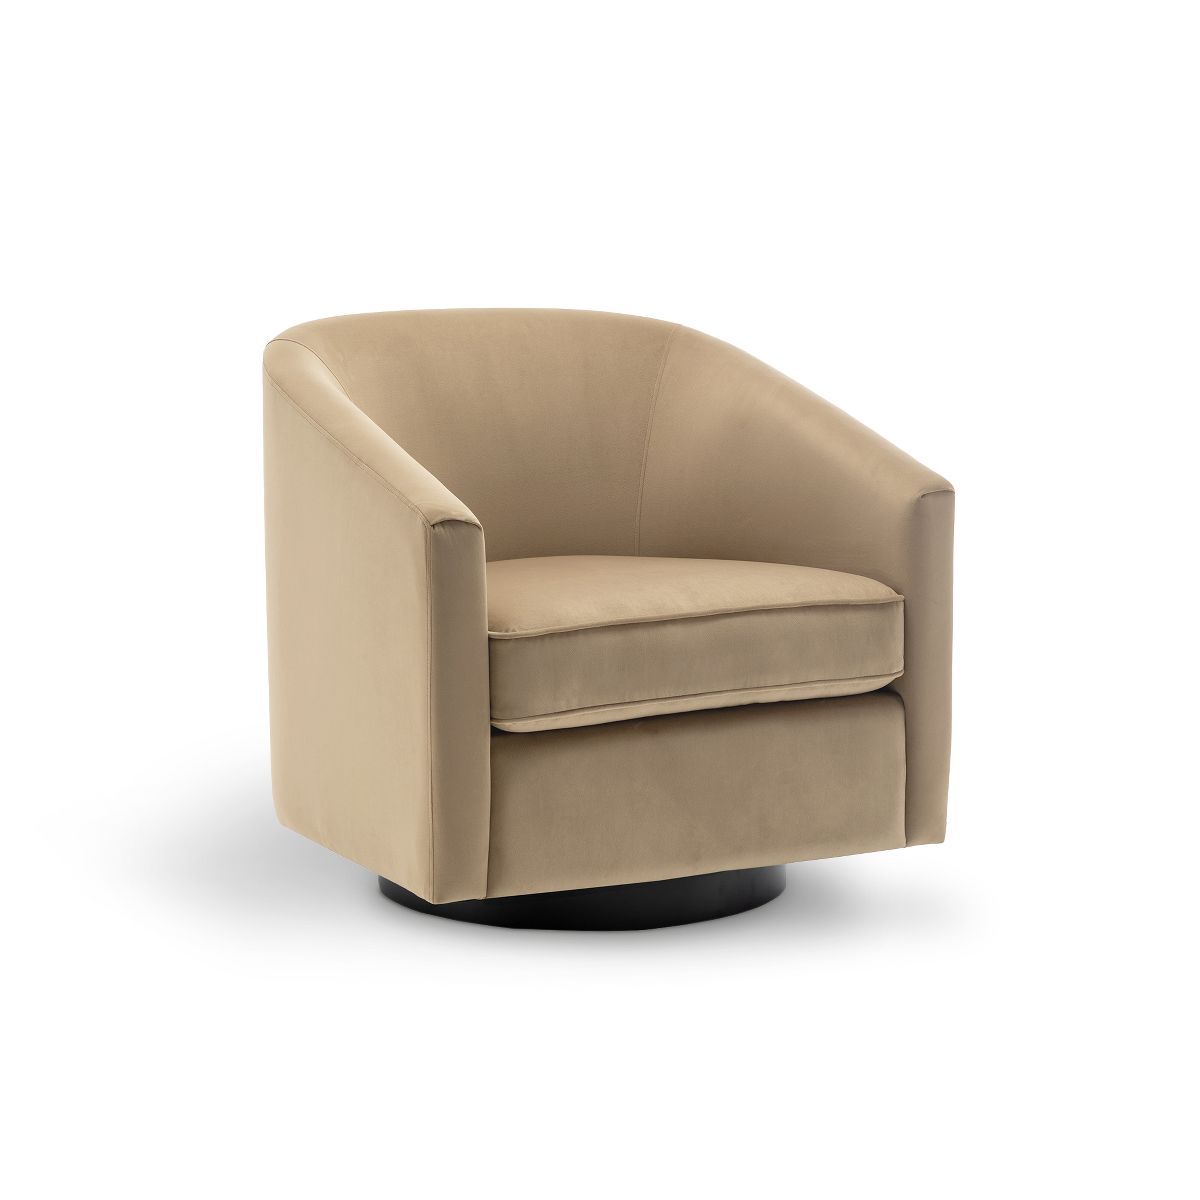 eLuxury Swivel Barrel Chair | Target